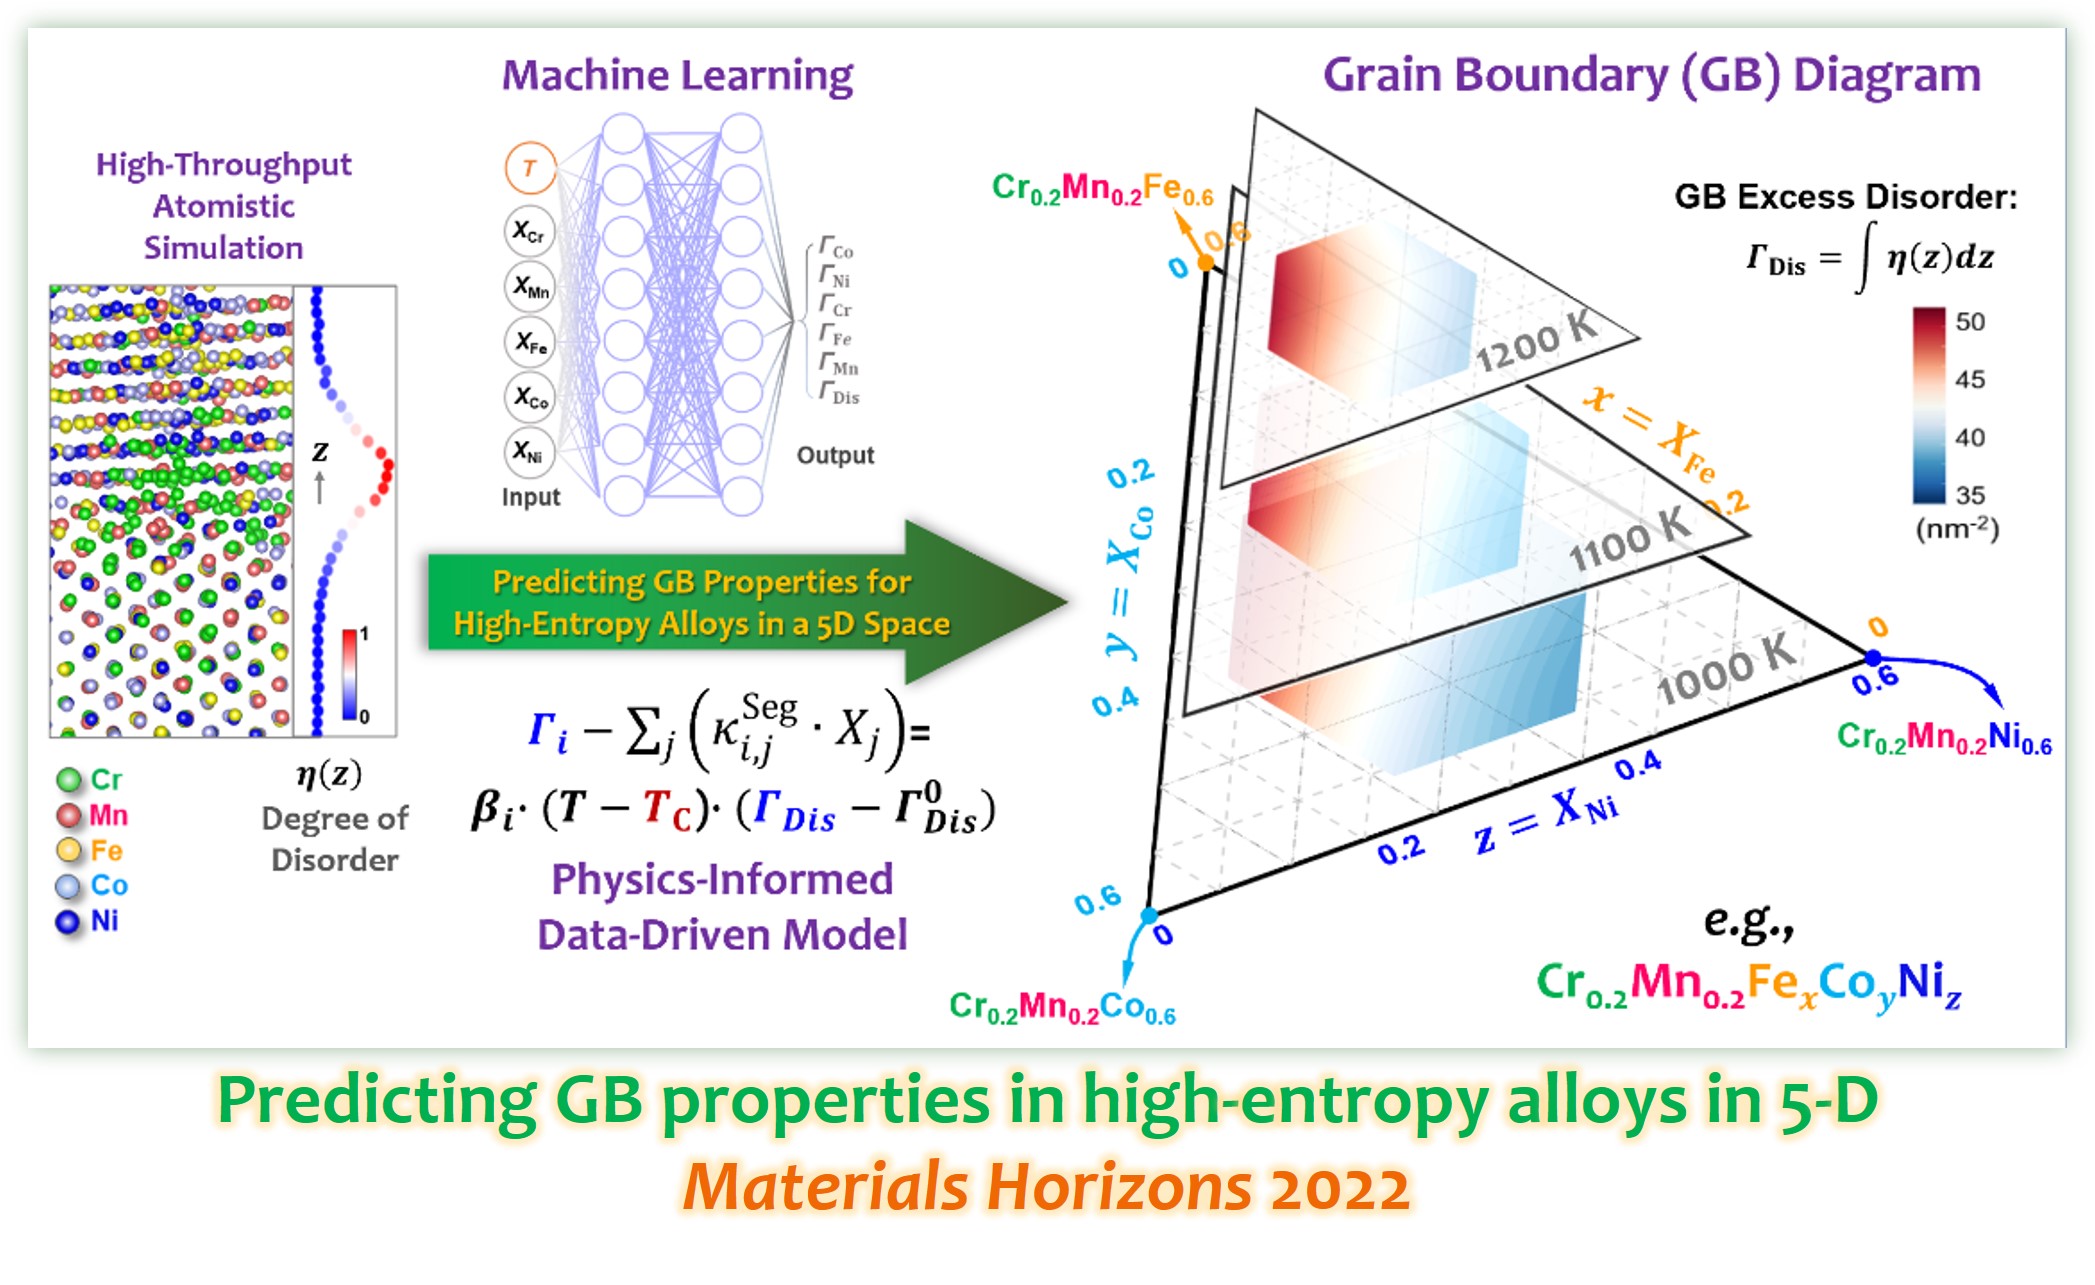 grain boundaies in high-entropy alloys